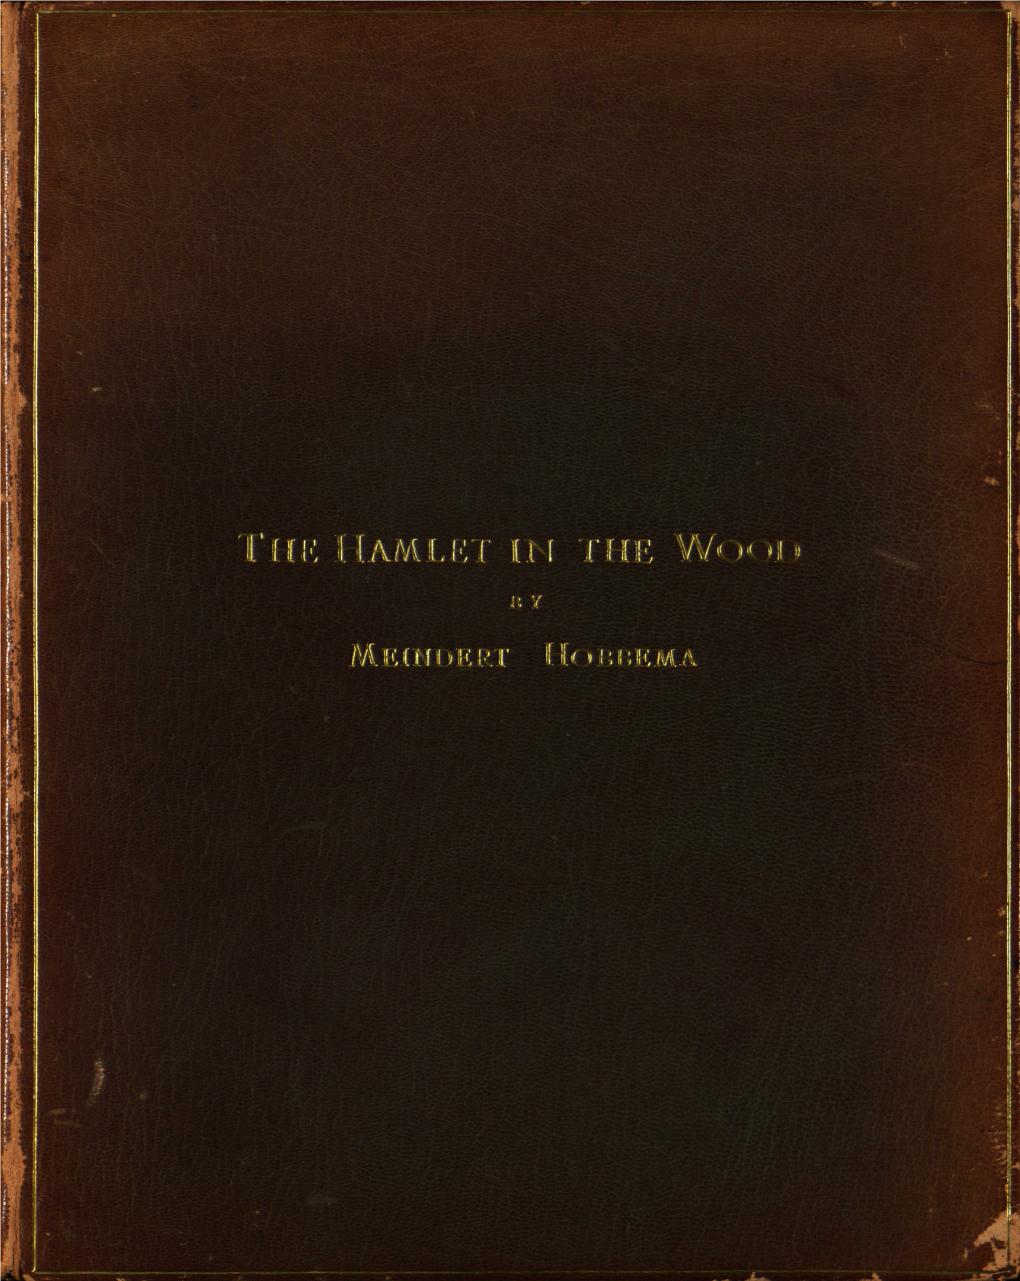 The Hamlet in the Wood / by Meindert Hobbema